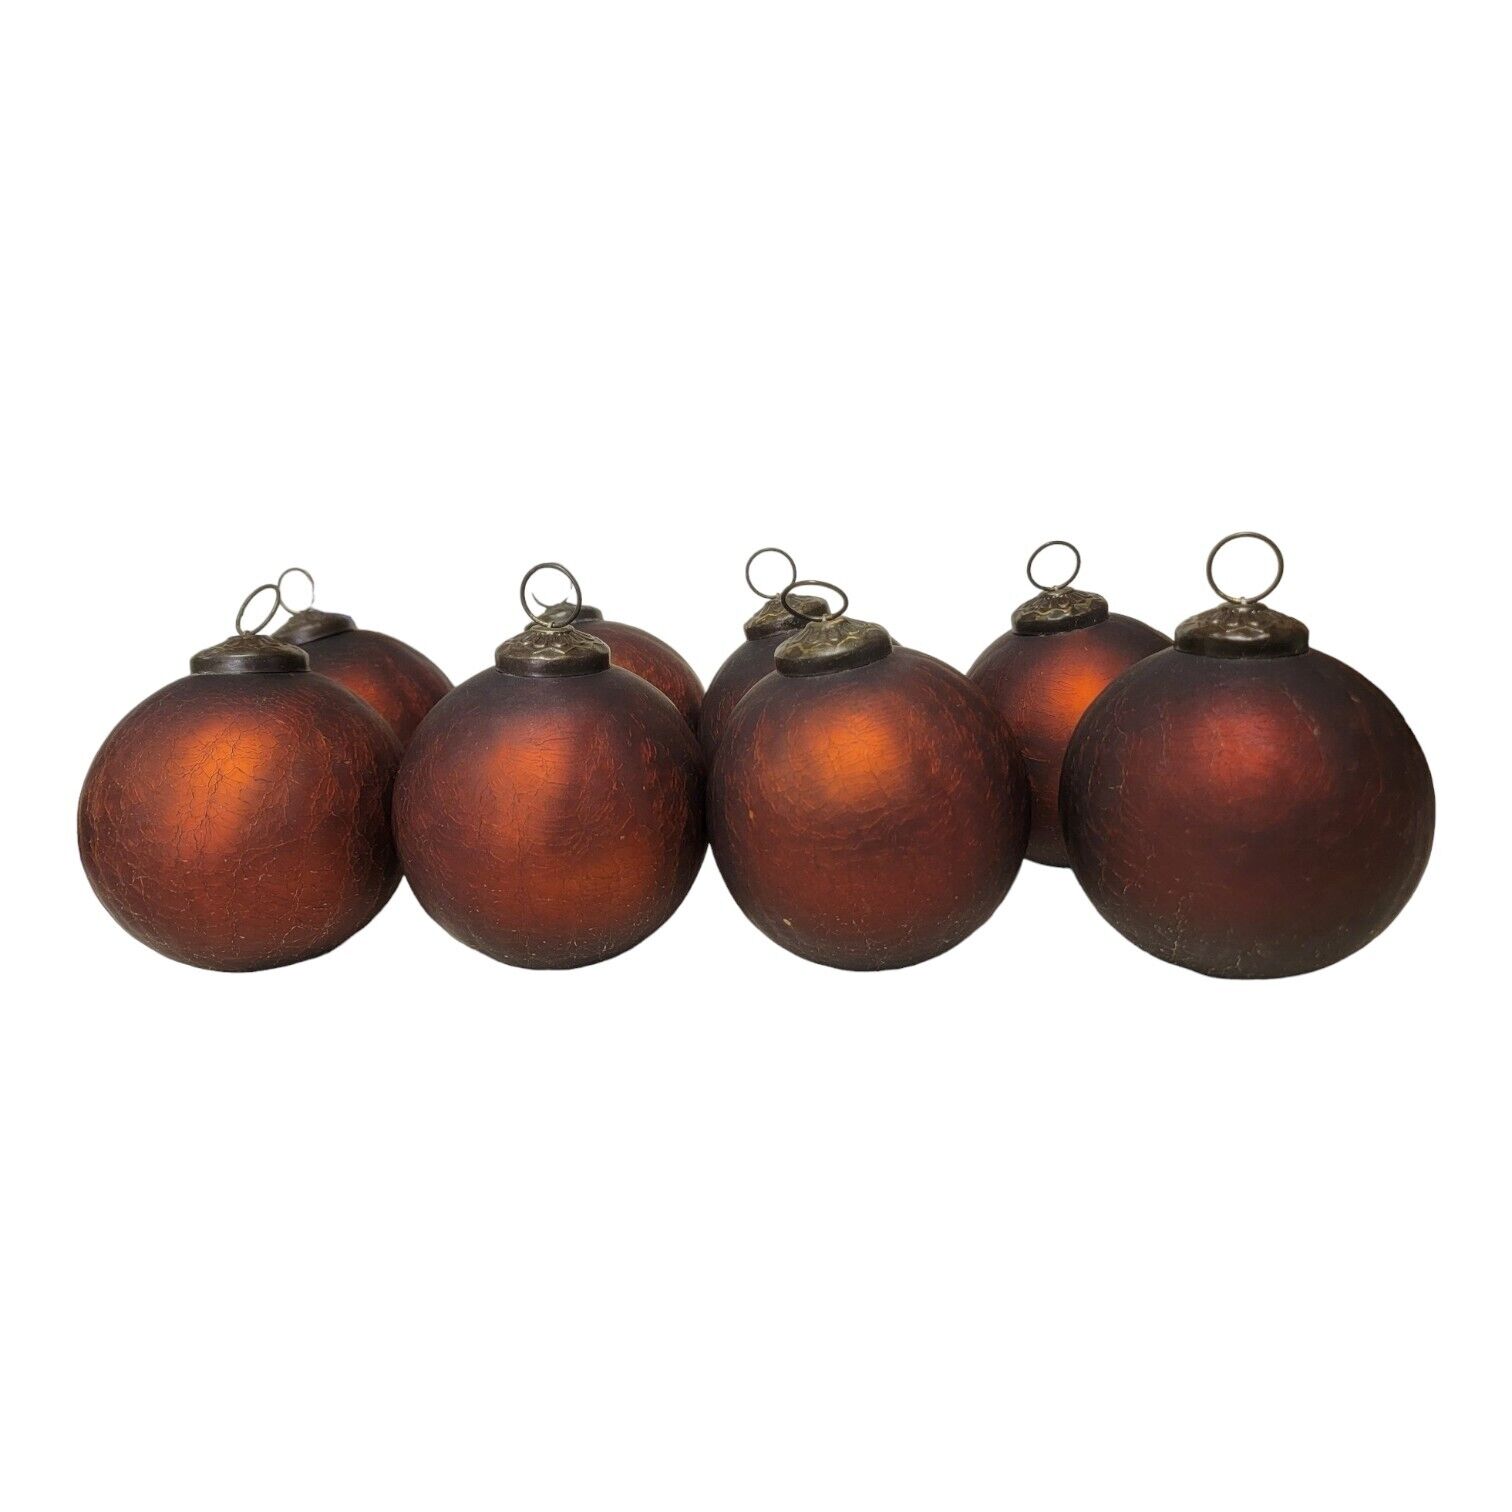 8 Vintage Heavy Glass Kugel Style Christmas Ornaments 4” Burgundy Red Brass Cap